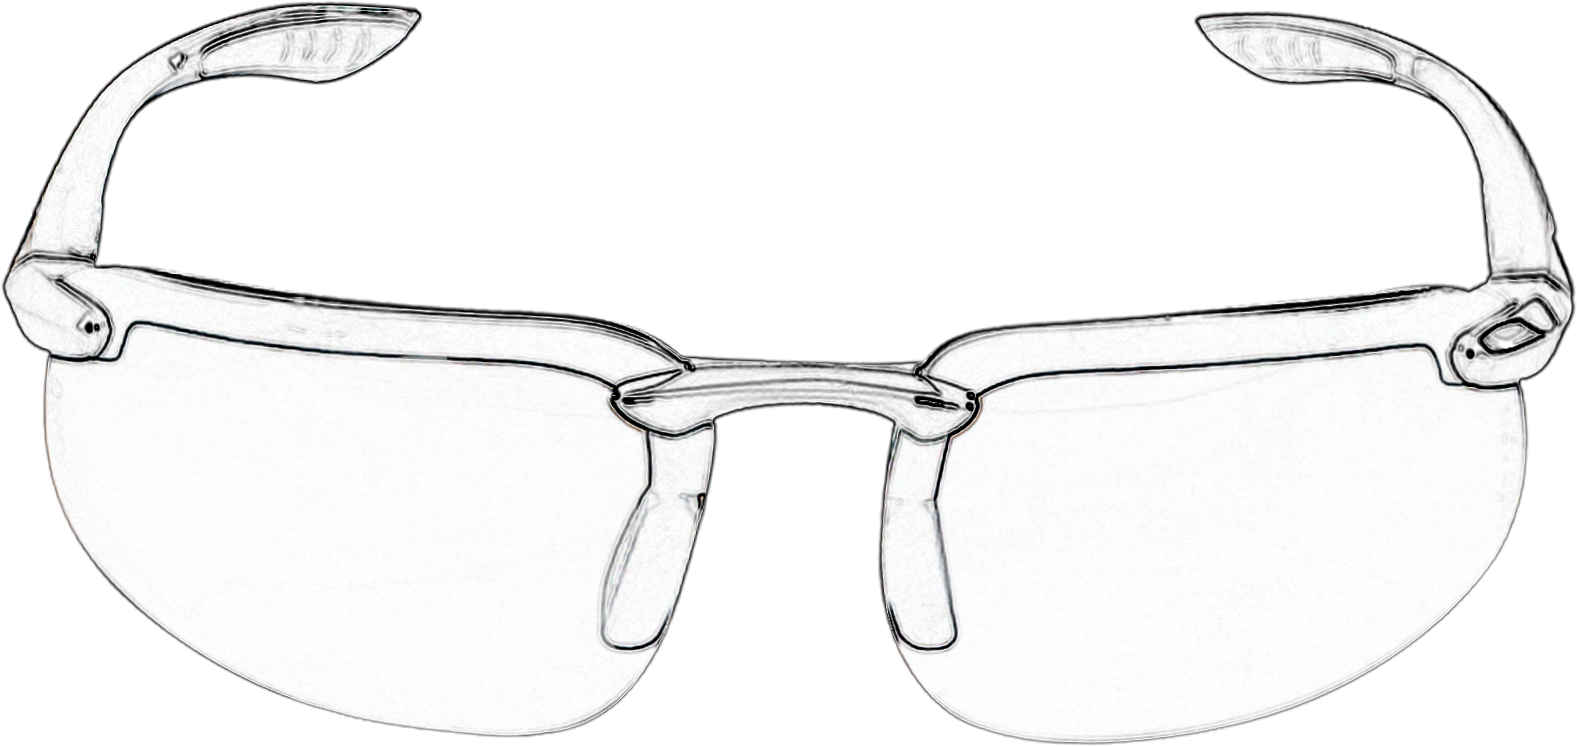 Half-frame eyewear for unobstructed vision